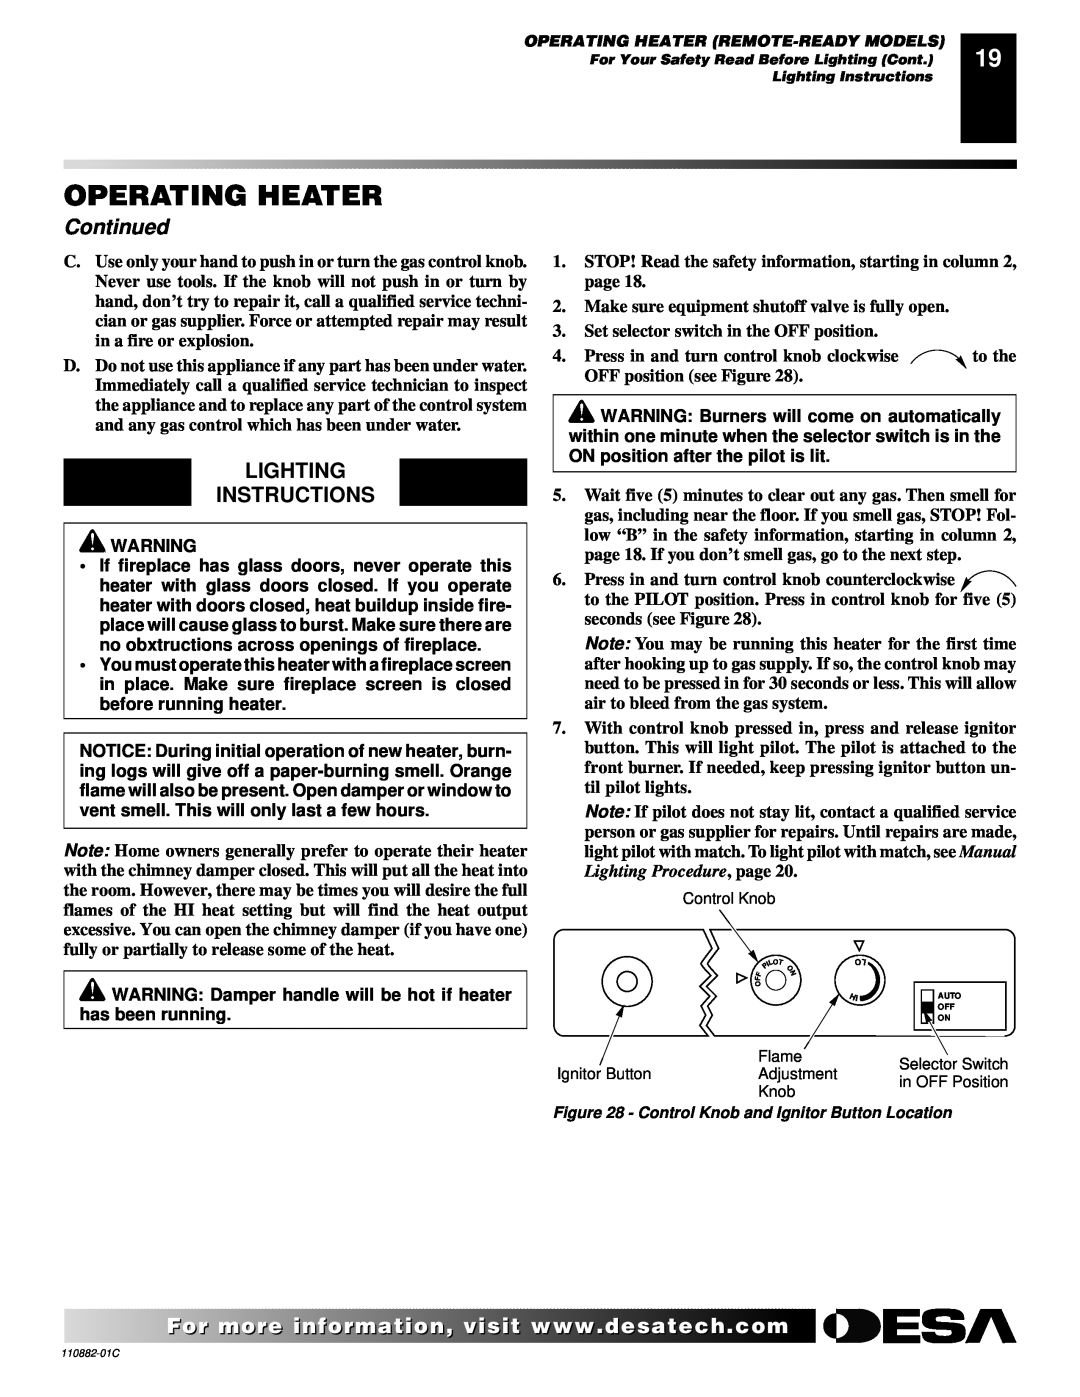 Desa R, V, T, 30 installation manual Operating Heater, Continued, Make sure equipment shutoff valve is fully open 